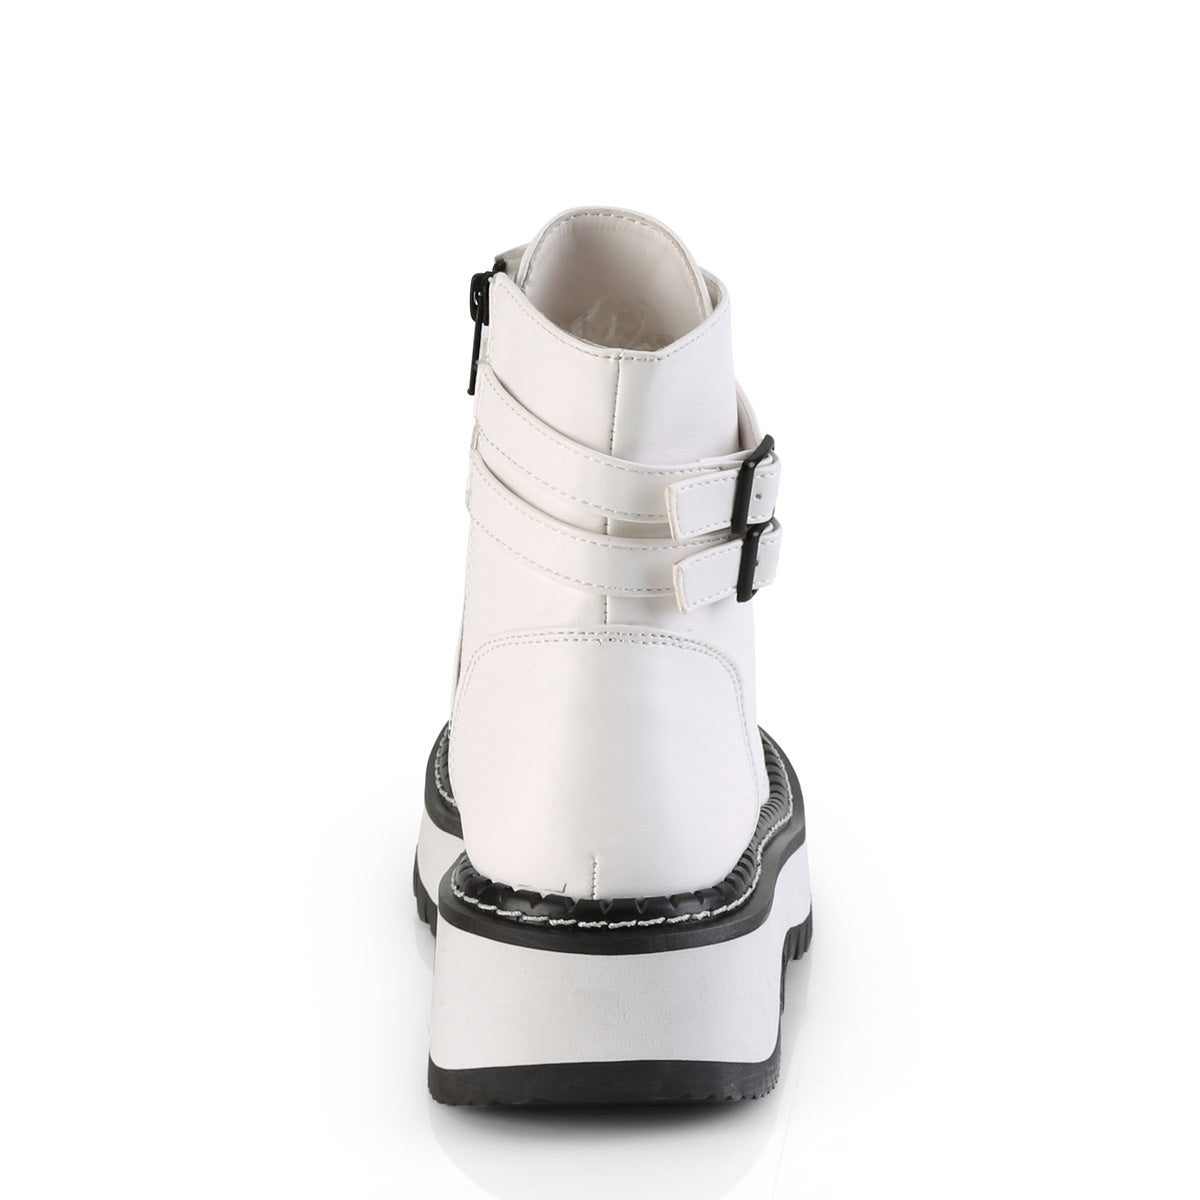 LILITH-152 Demonia White Vegan Leather Women's Ankle Boots [Alternative Footwear]